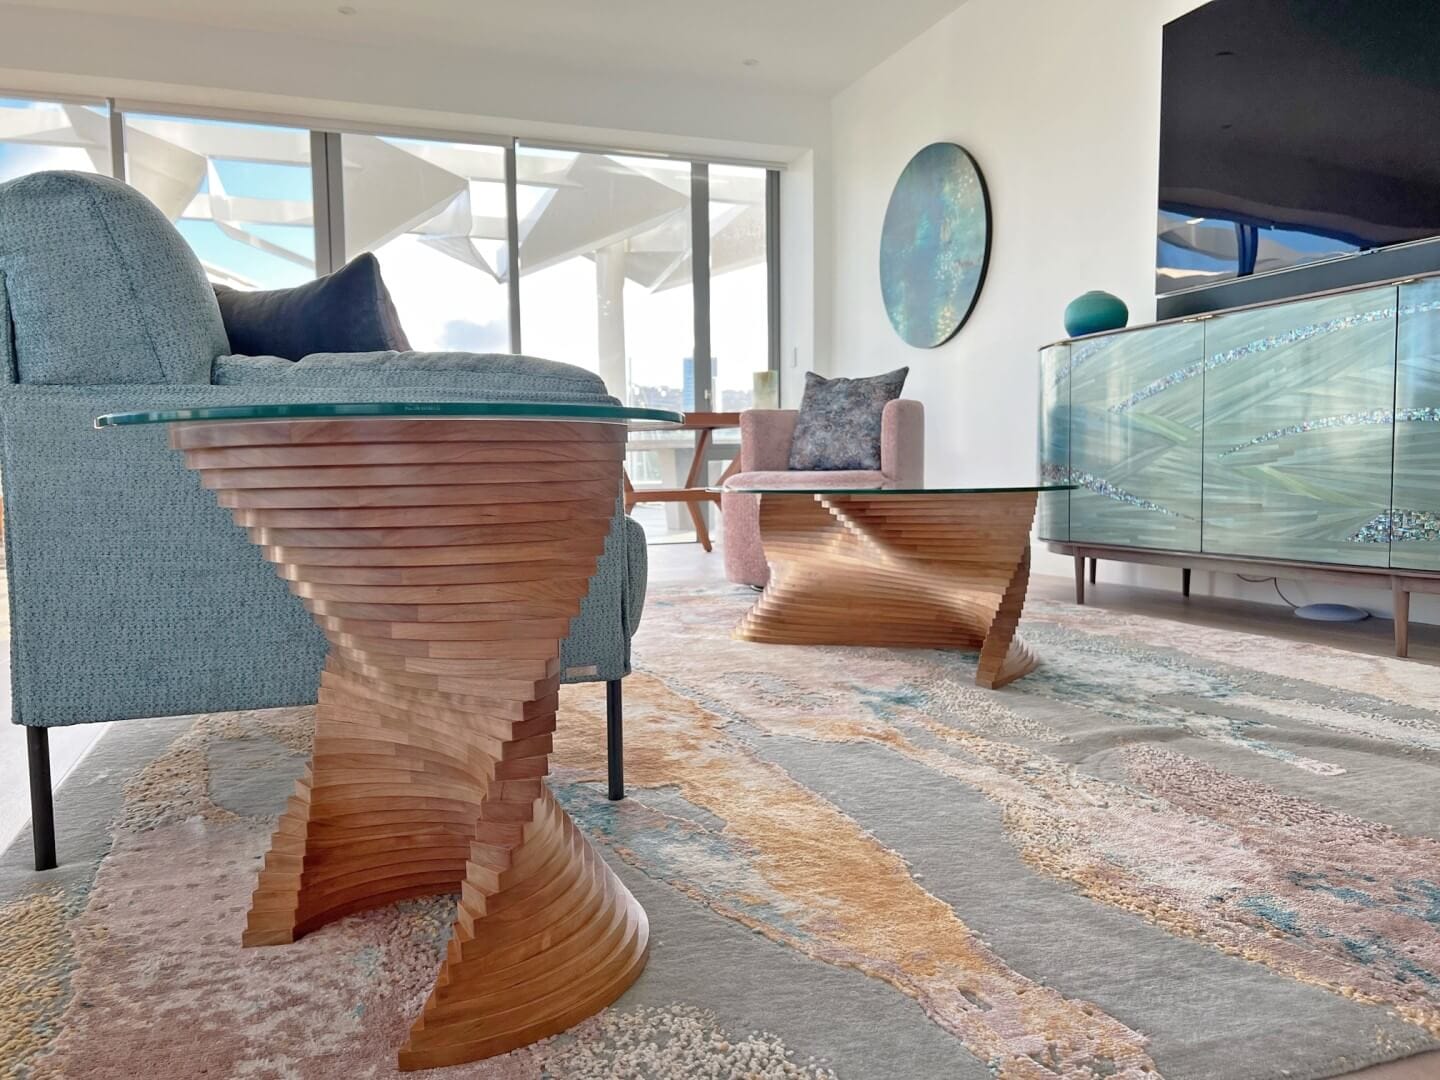 Aguaviva sculptural side table in Jon Landau’s living room